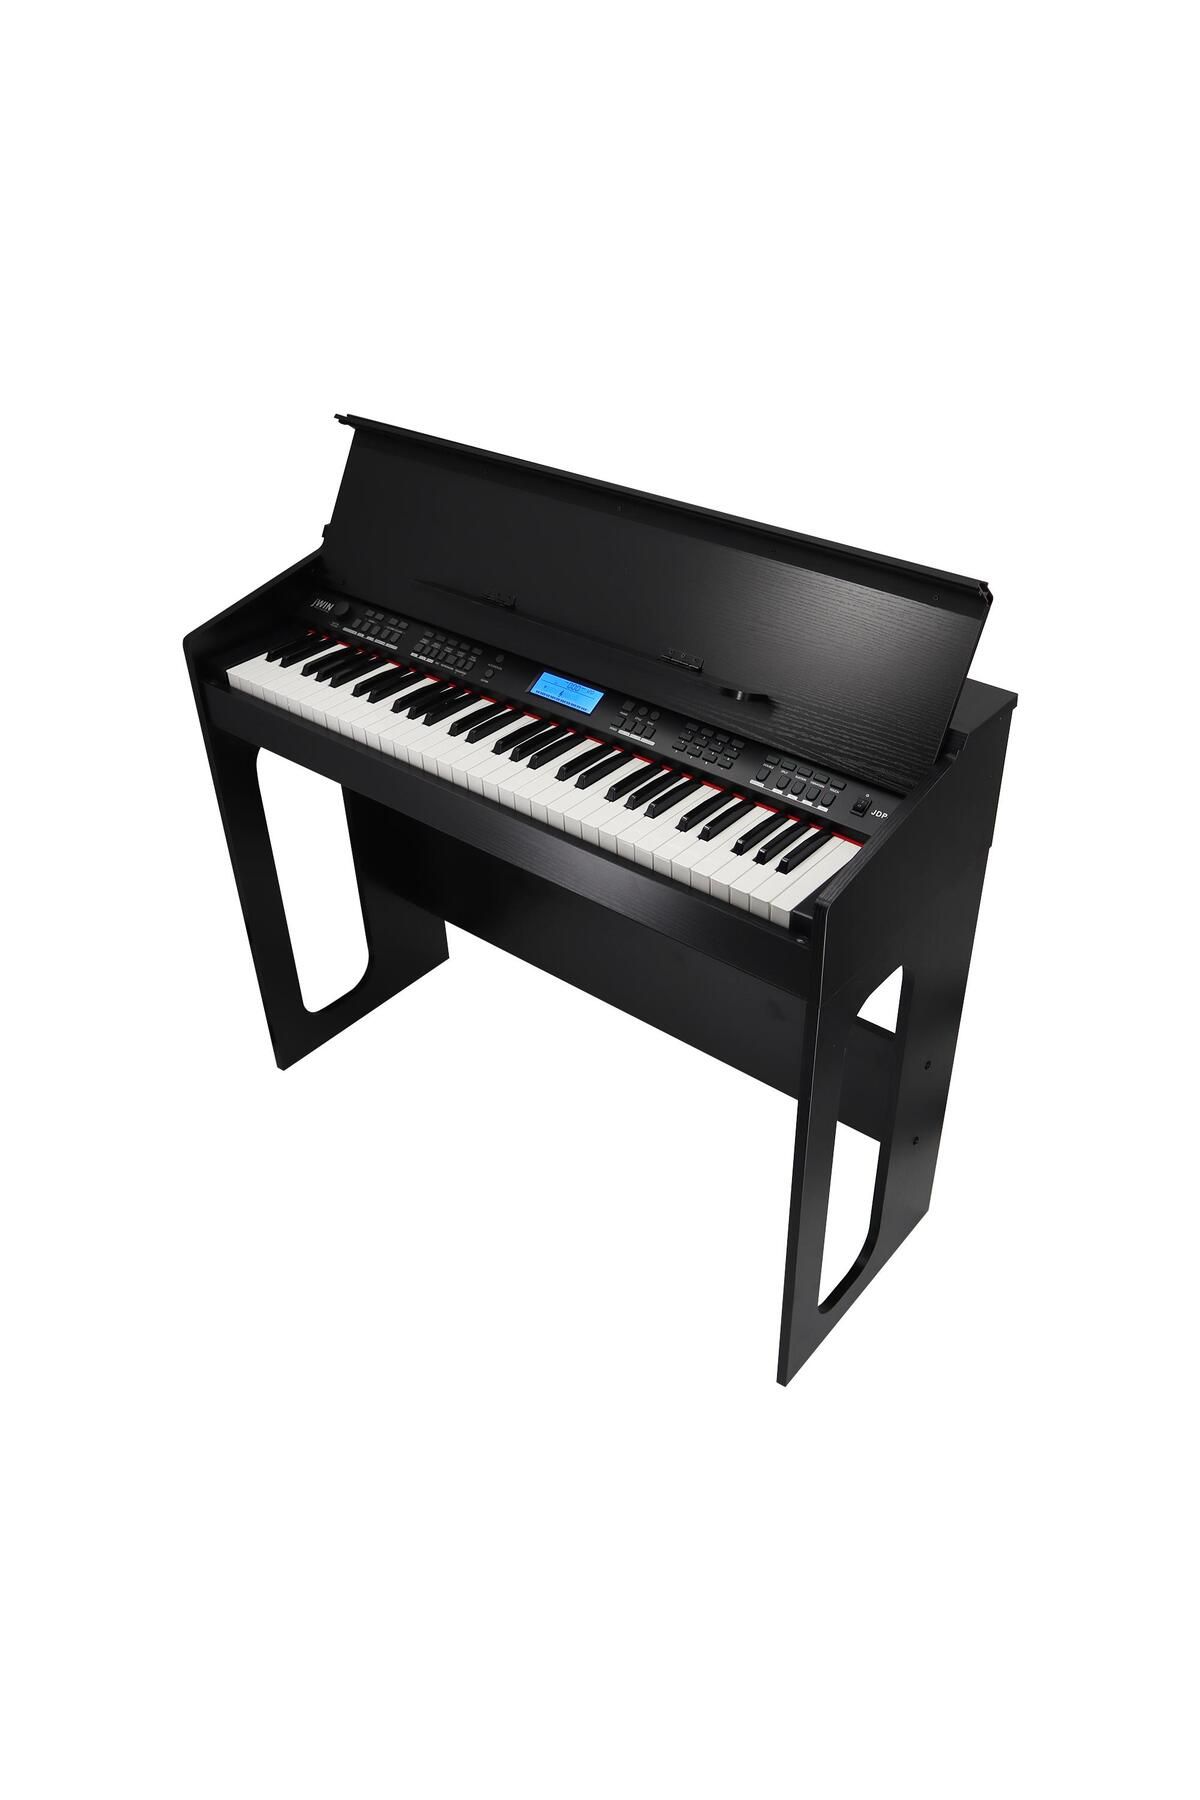 JWIN Jdp-950 Tuş Hassasiyetli 61 Tuşlu Dijital Piyano - Siyah